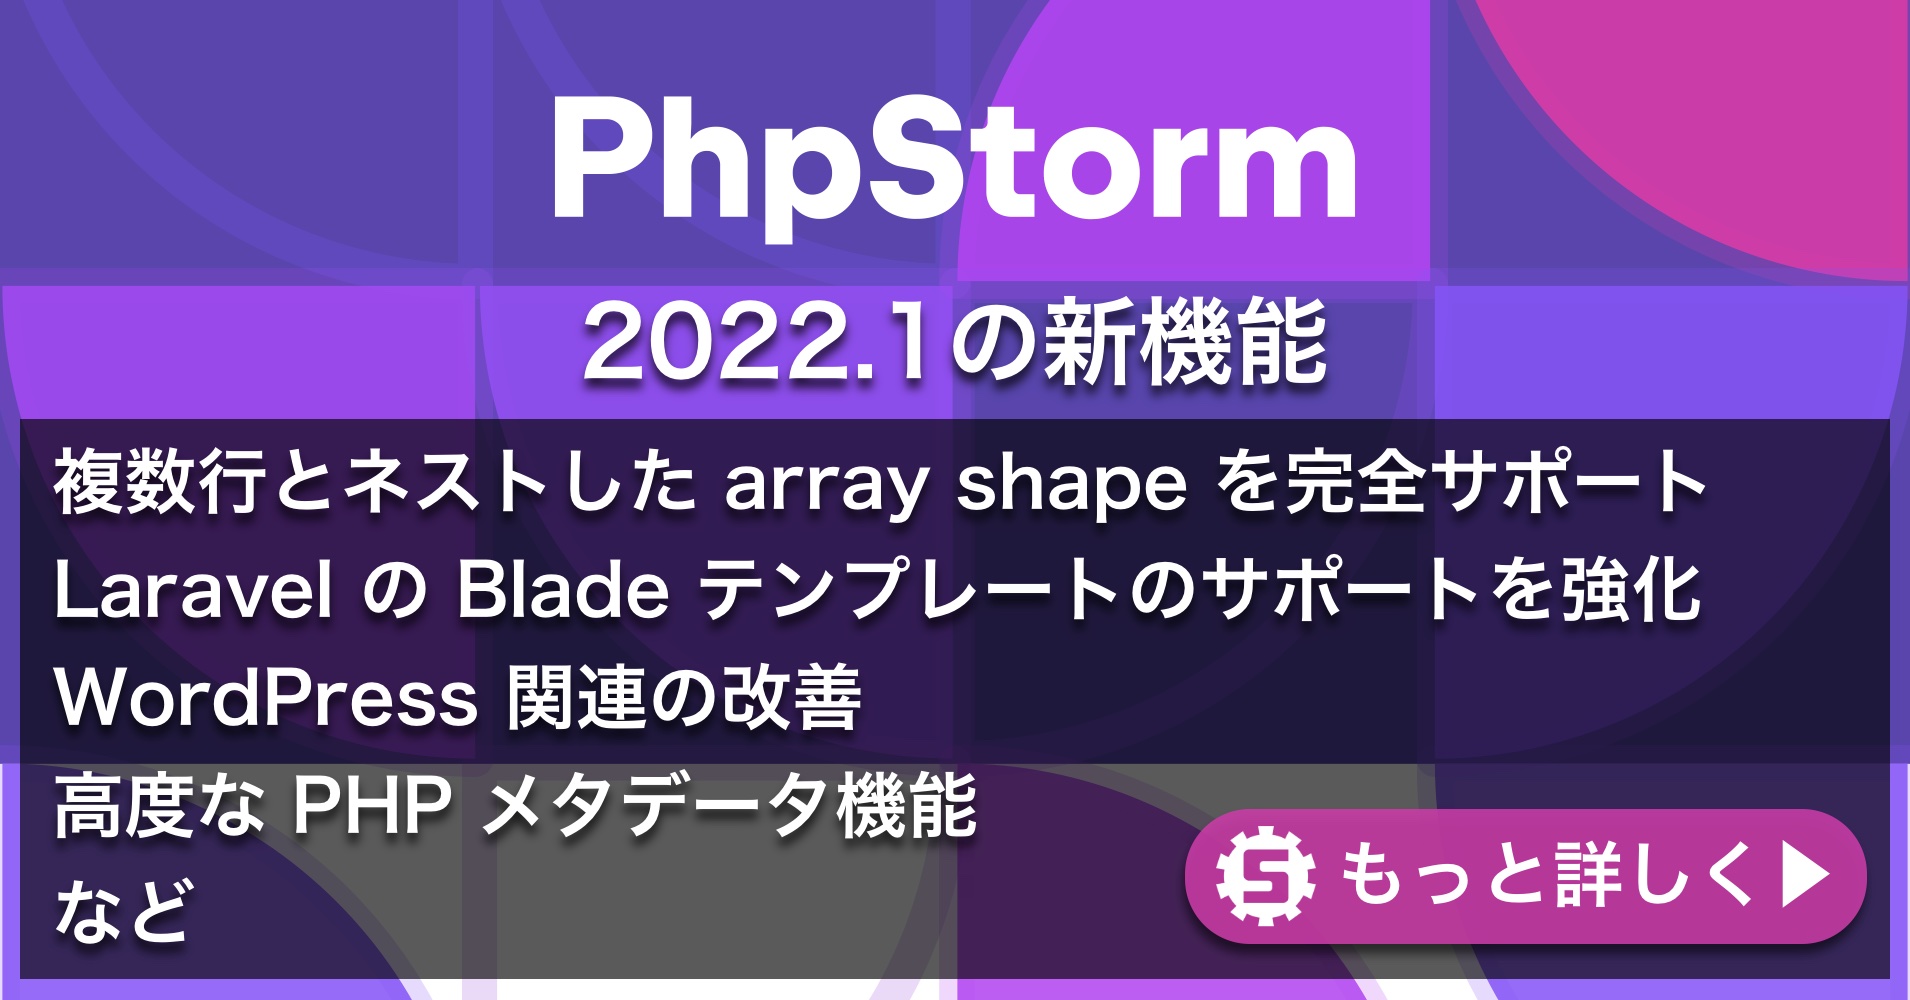 PhpStorm 2022.1の新機能